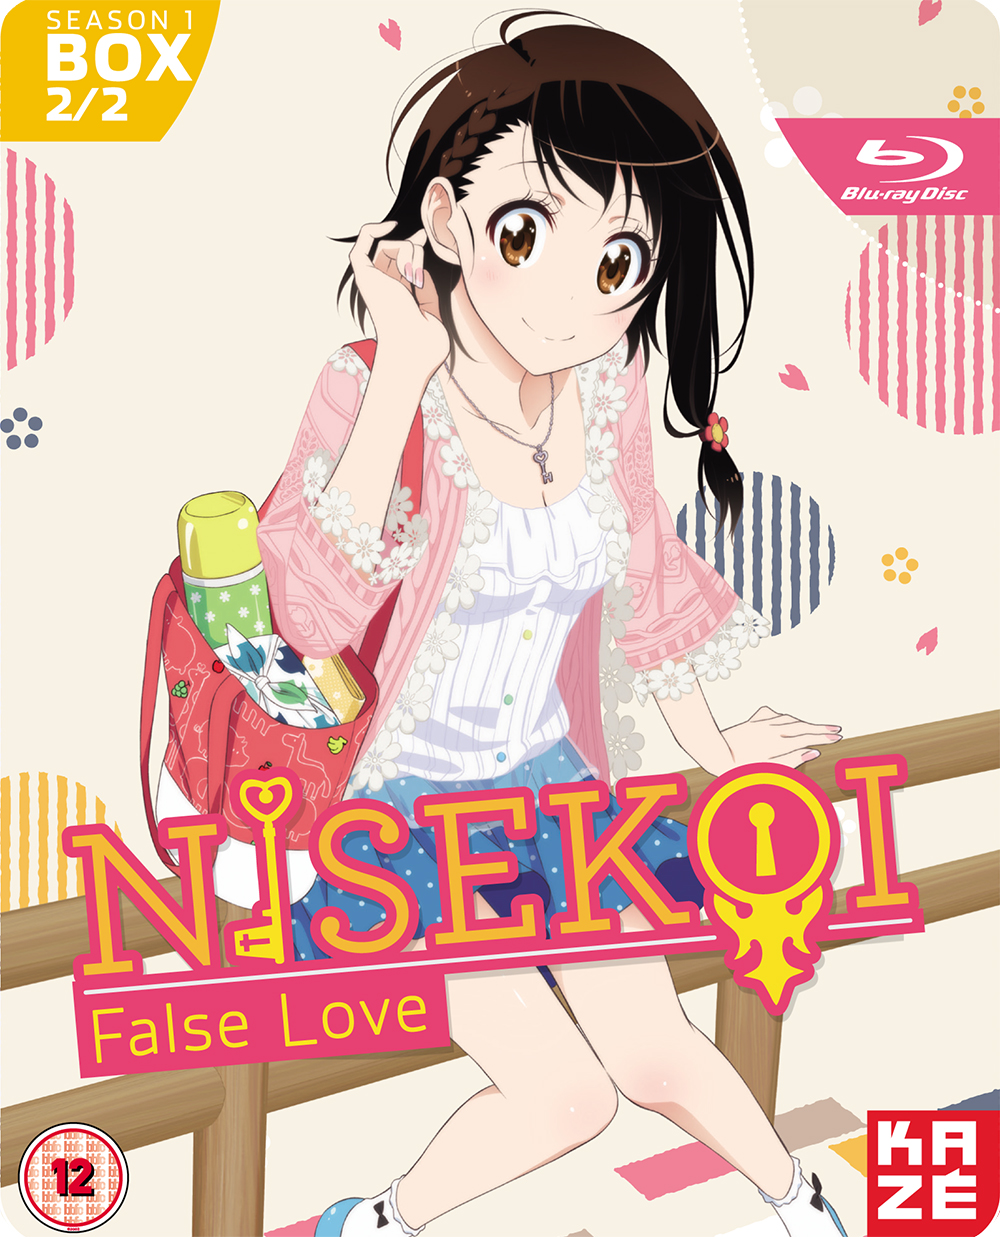 False love. Nisekoi: false Love. True Love and false Idols. Love "false start".